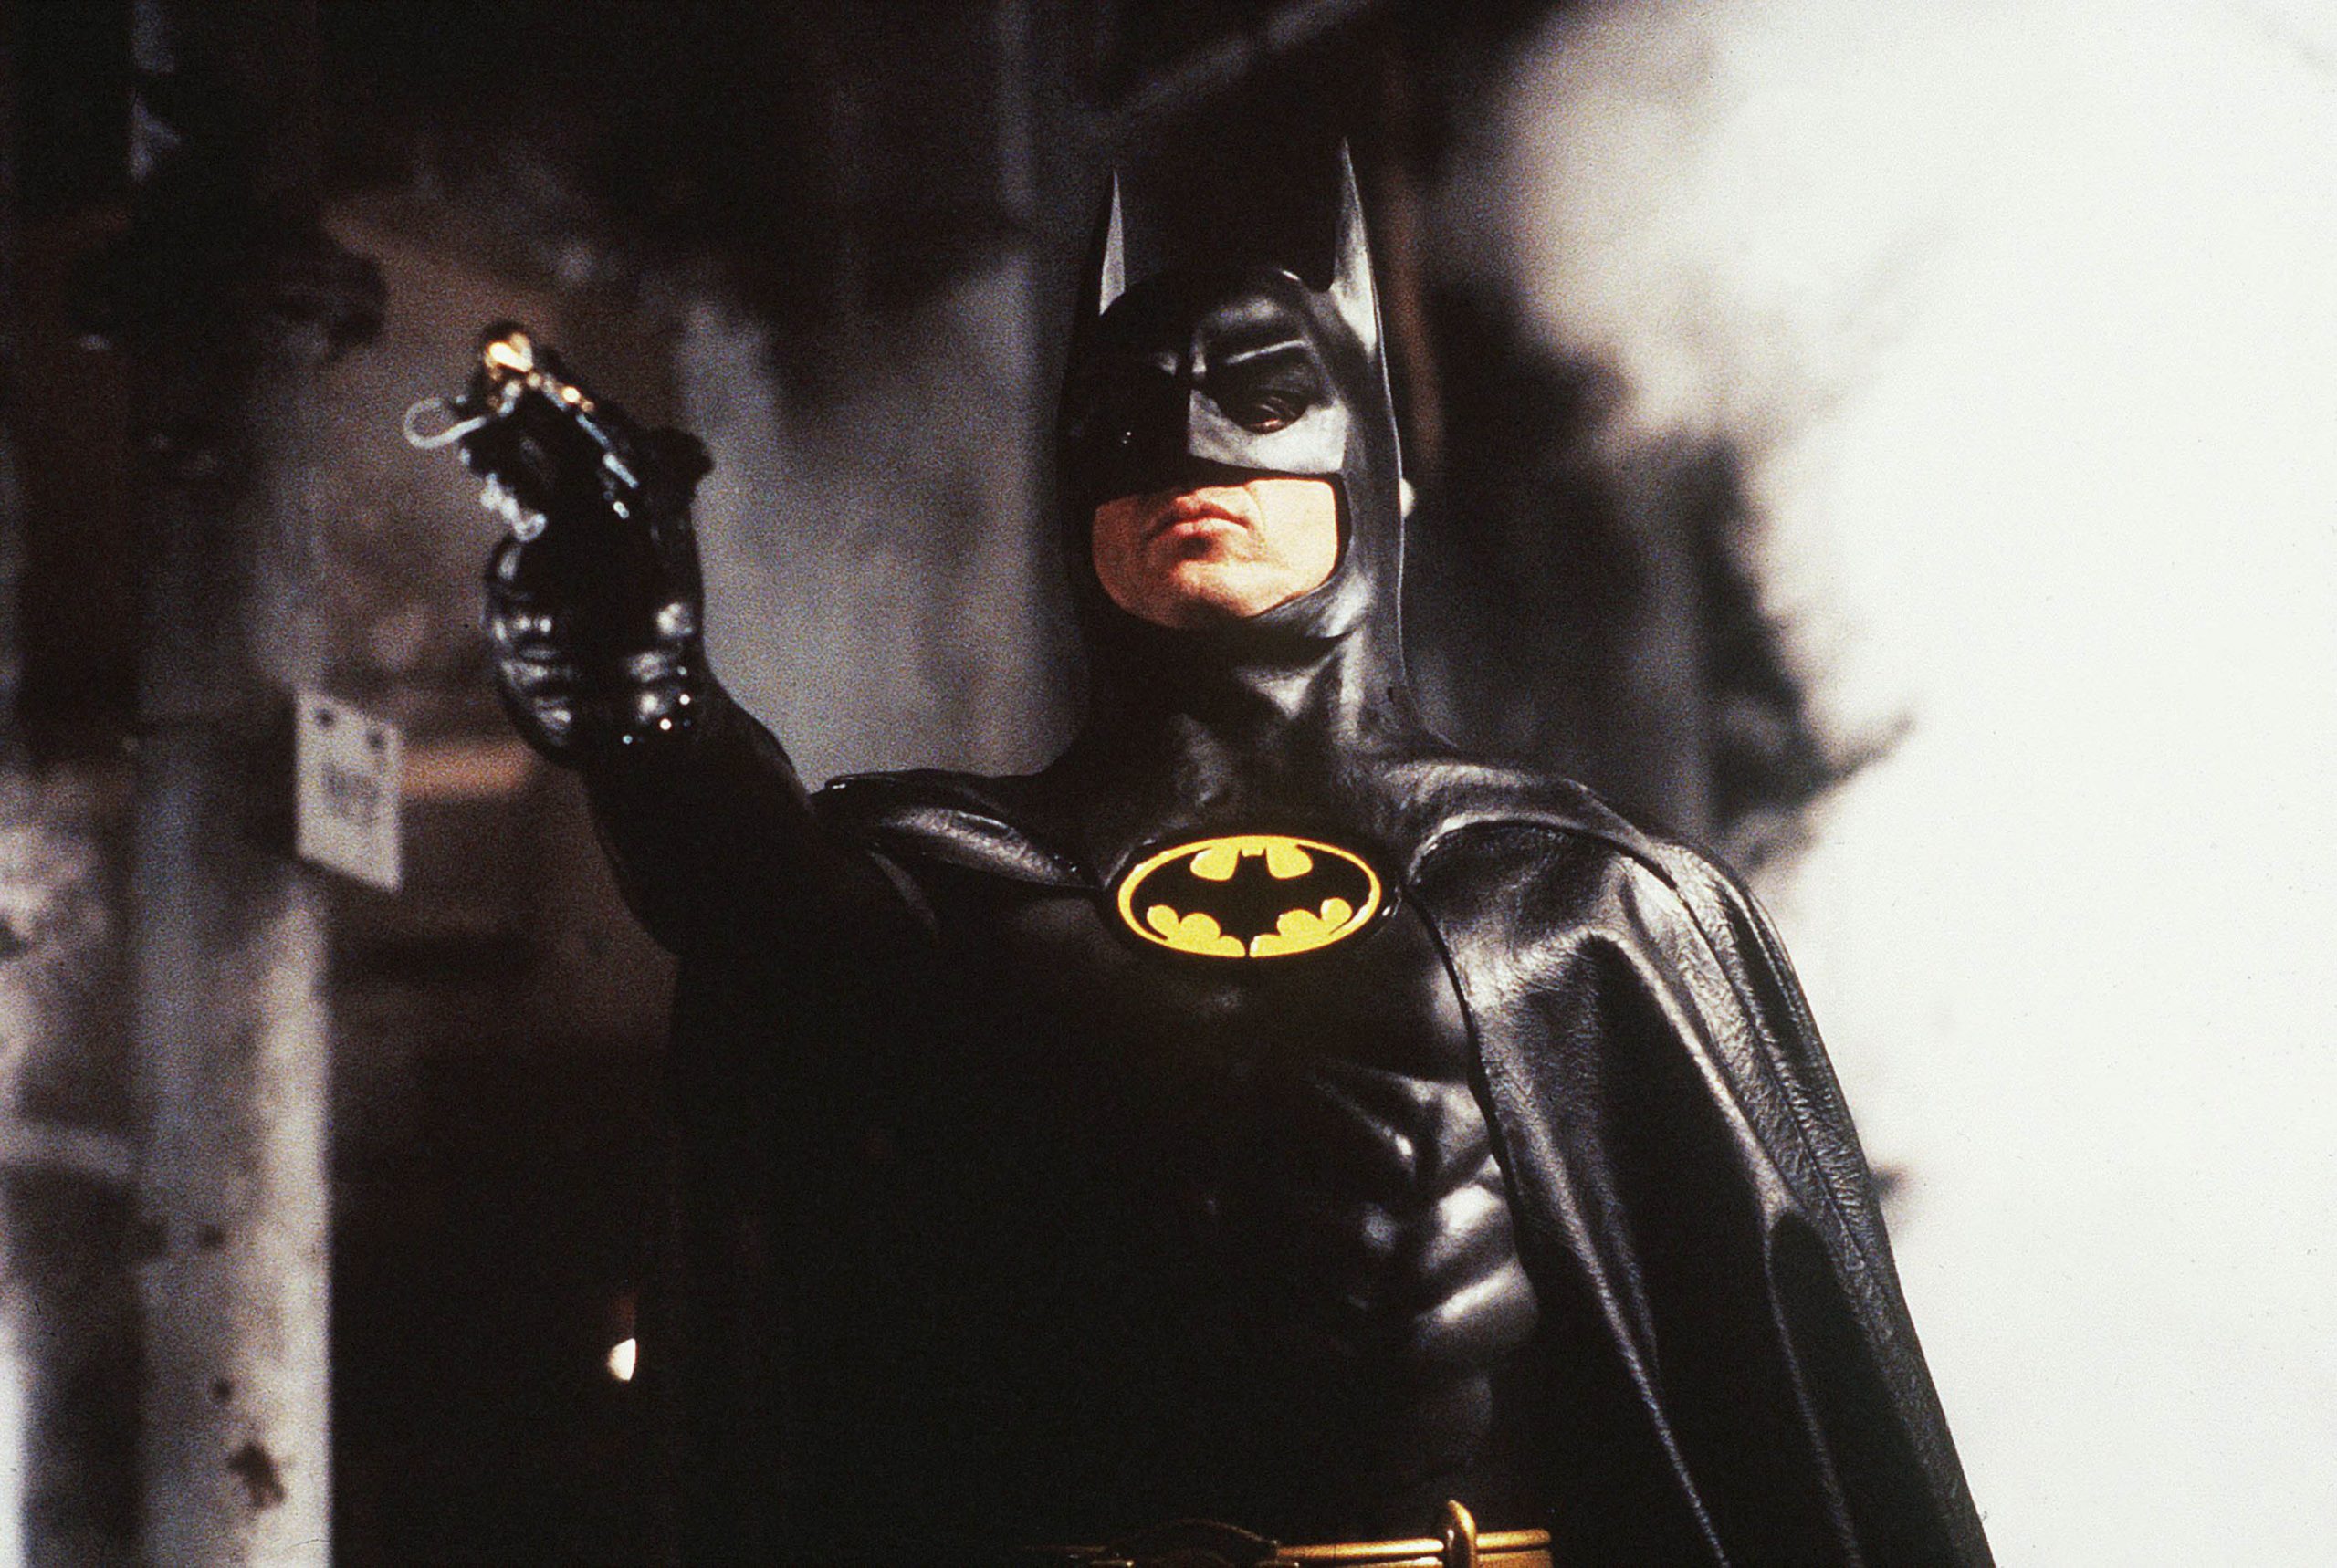 Michael Keaton from the 1989 Batman film